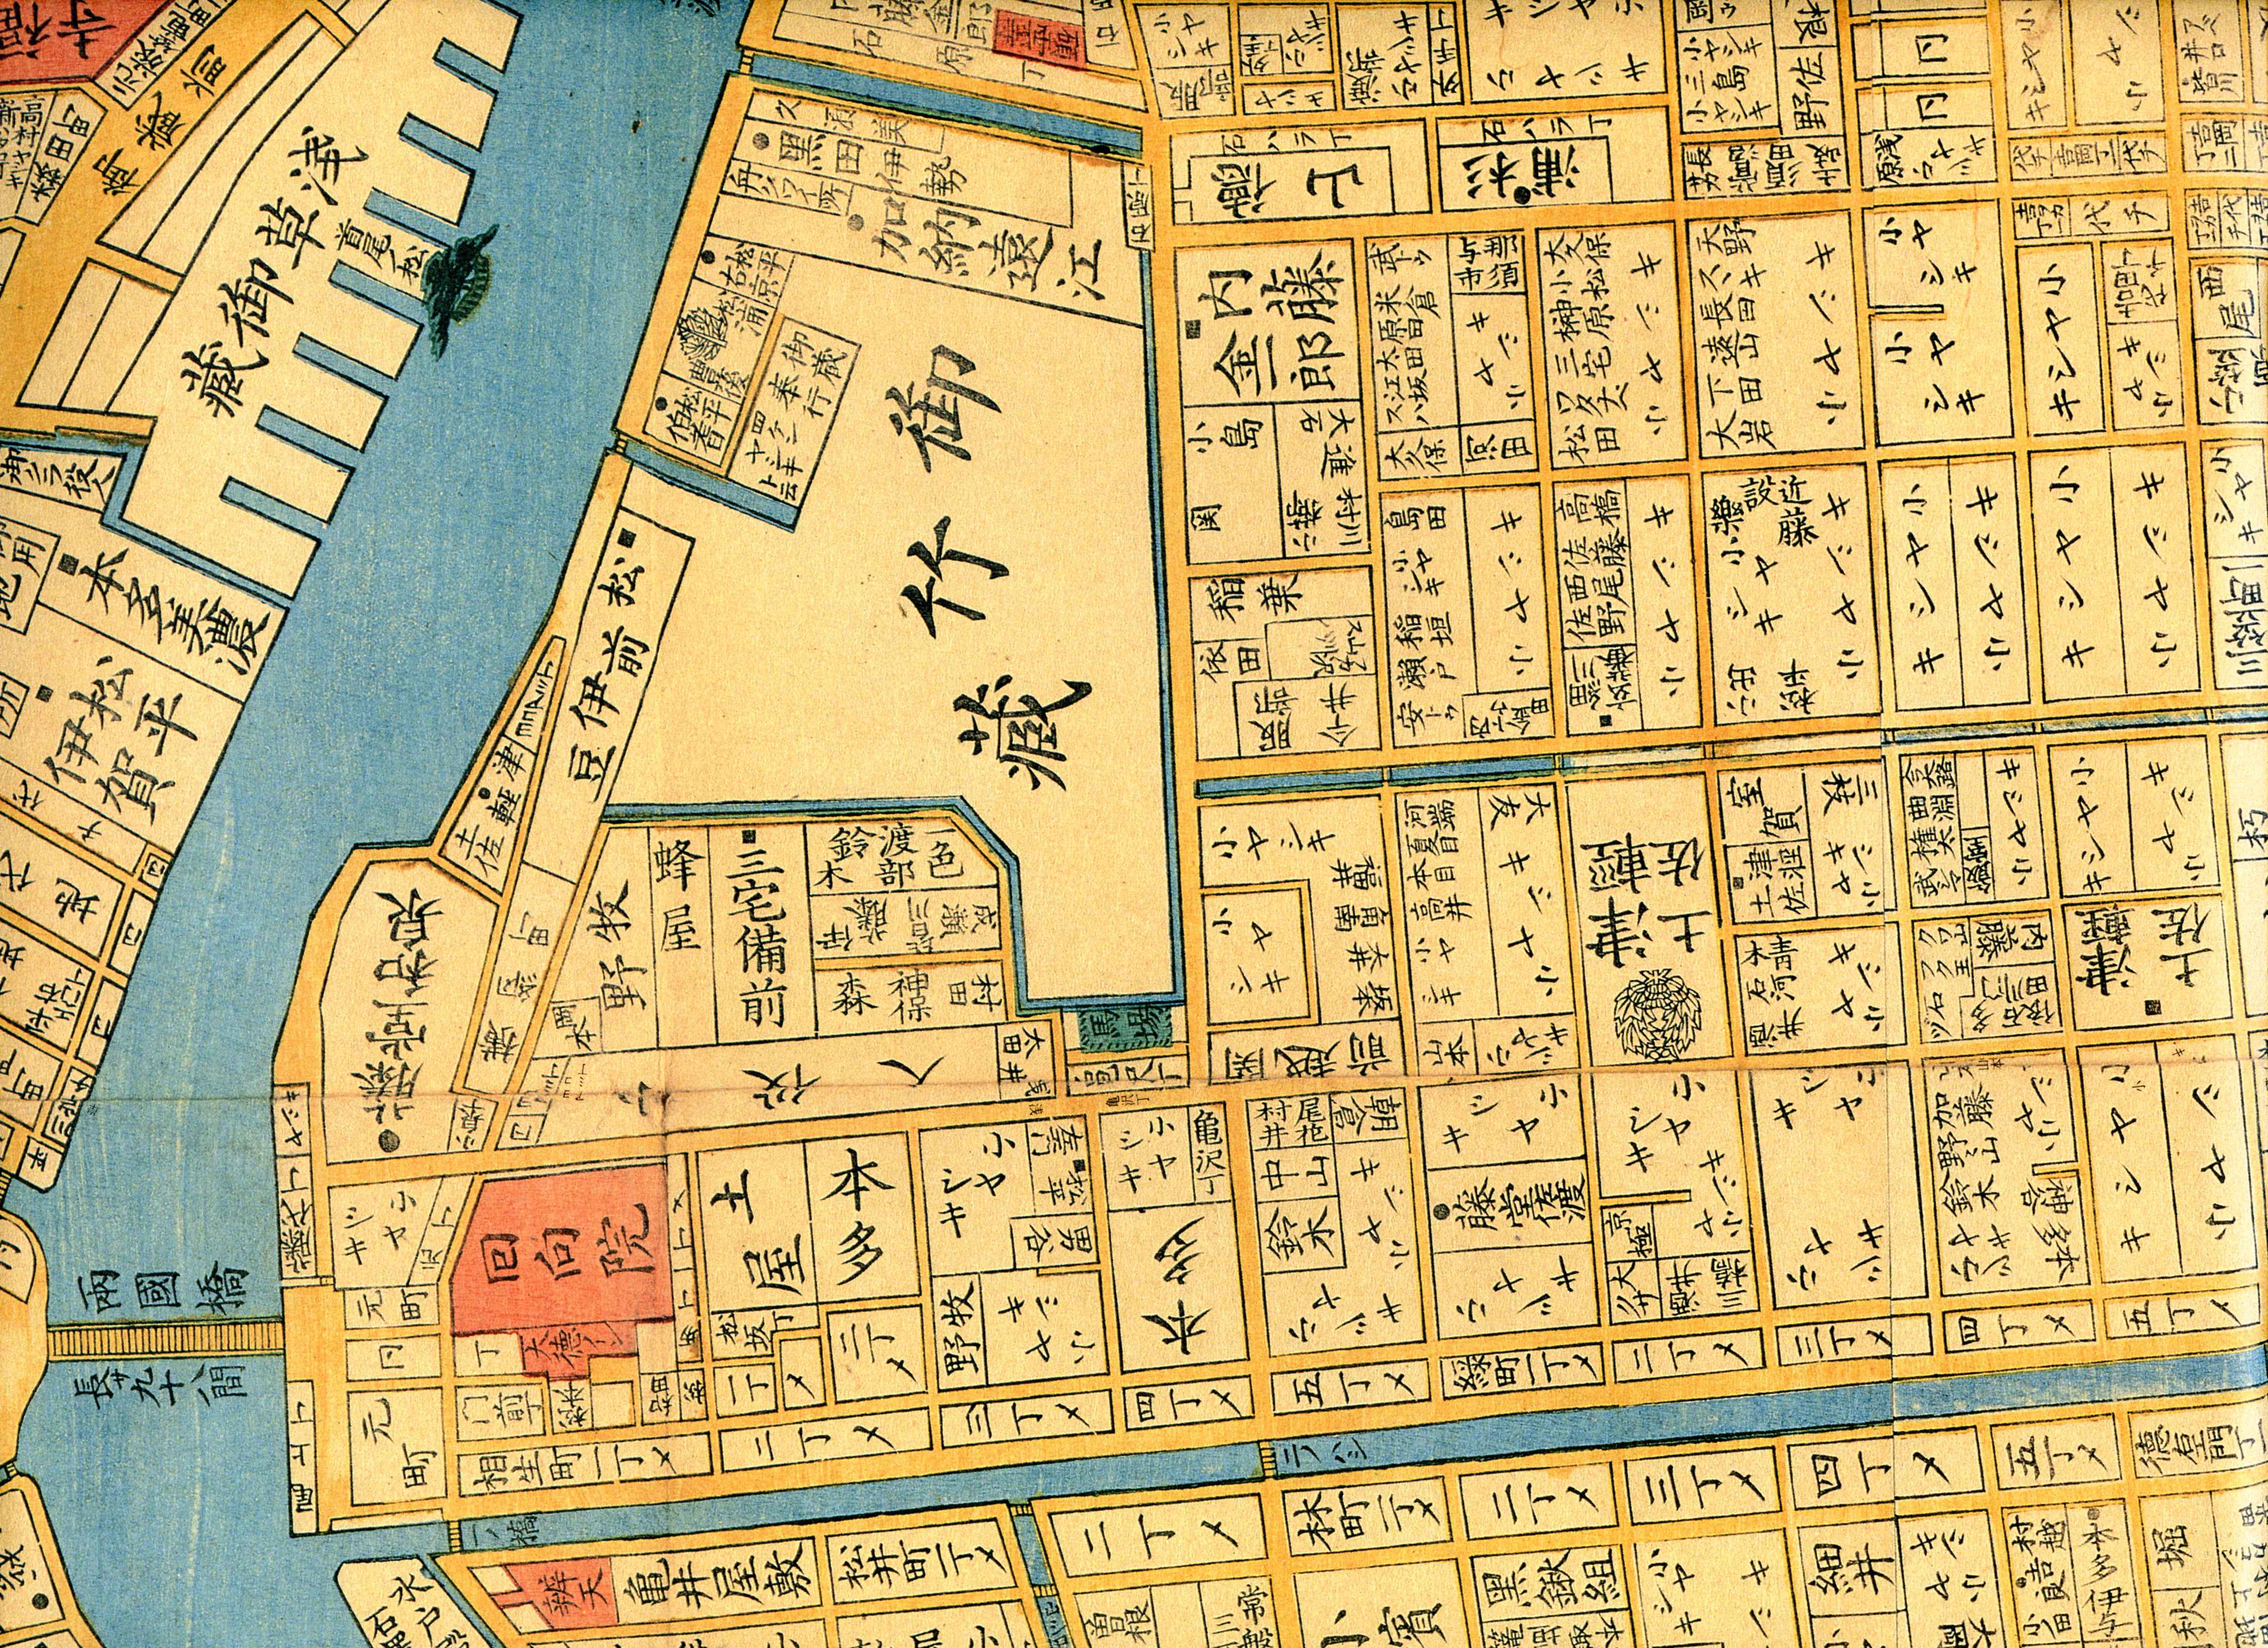 Collegio - 之潮 - コレジオ » Blog Archive » 古地図巡礼 map pilgrimage